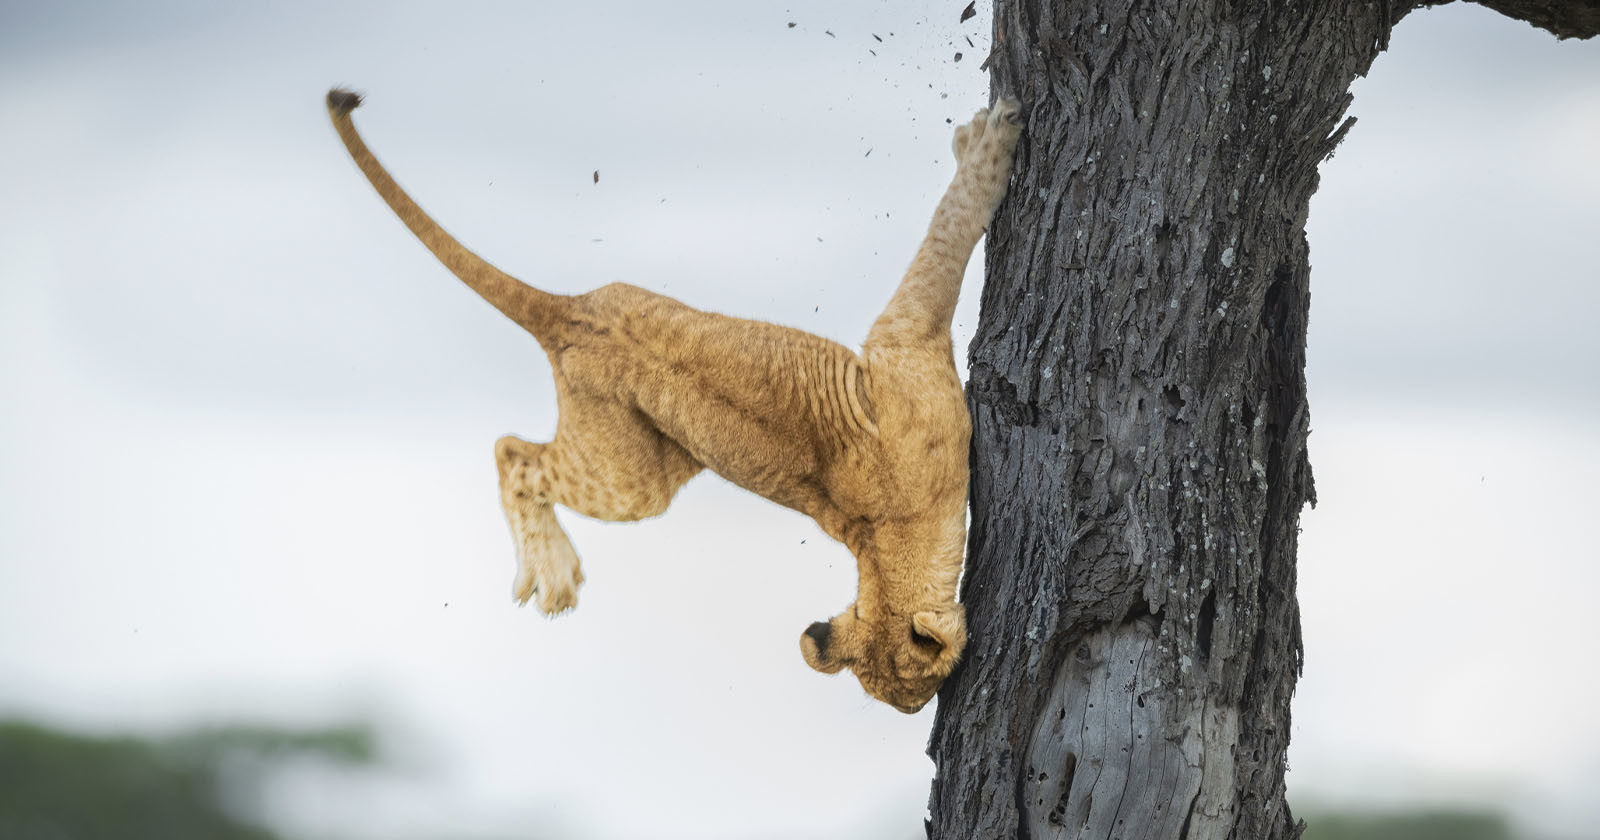  clumsy lion cub tree mishap wins comedy wildlife 